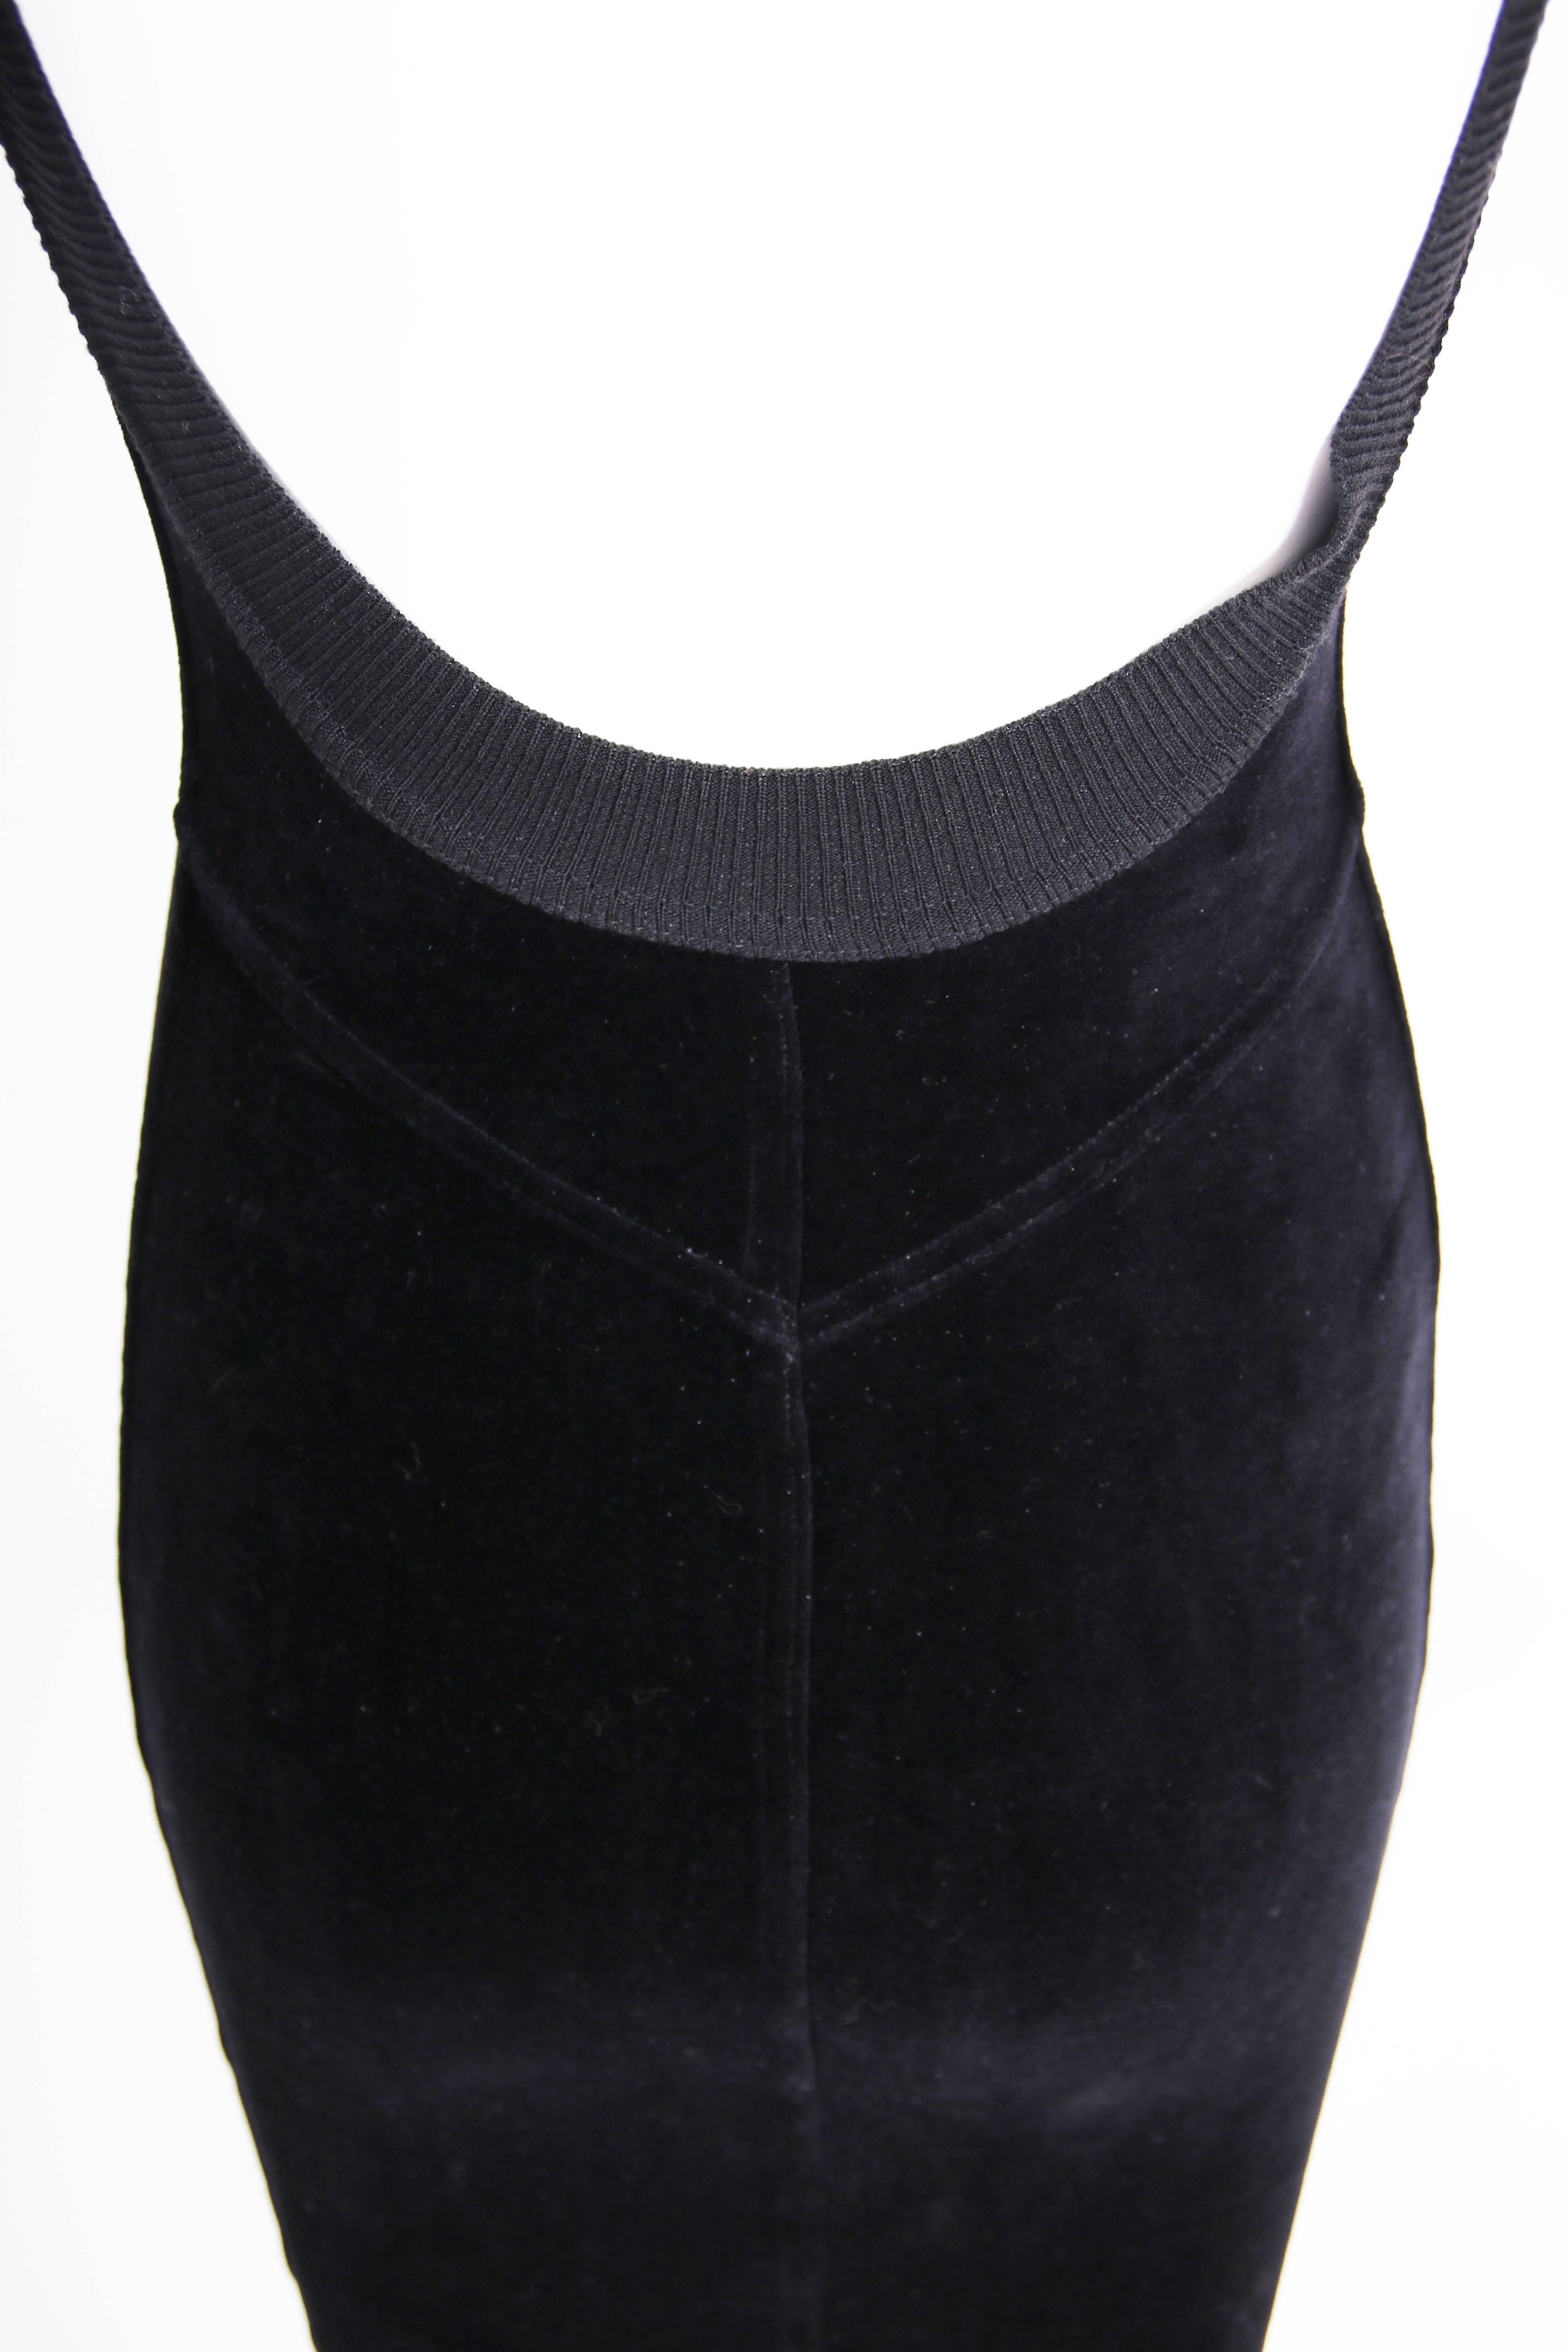 Alaia Black Stretch Velvet Bodycon Mini Dress w/Open Back  For Sale 1